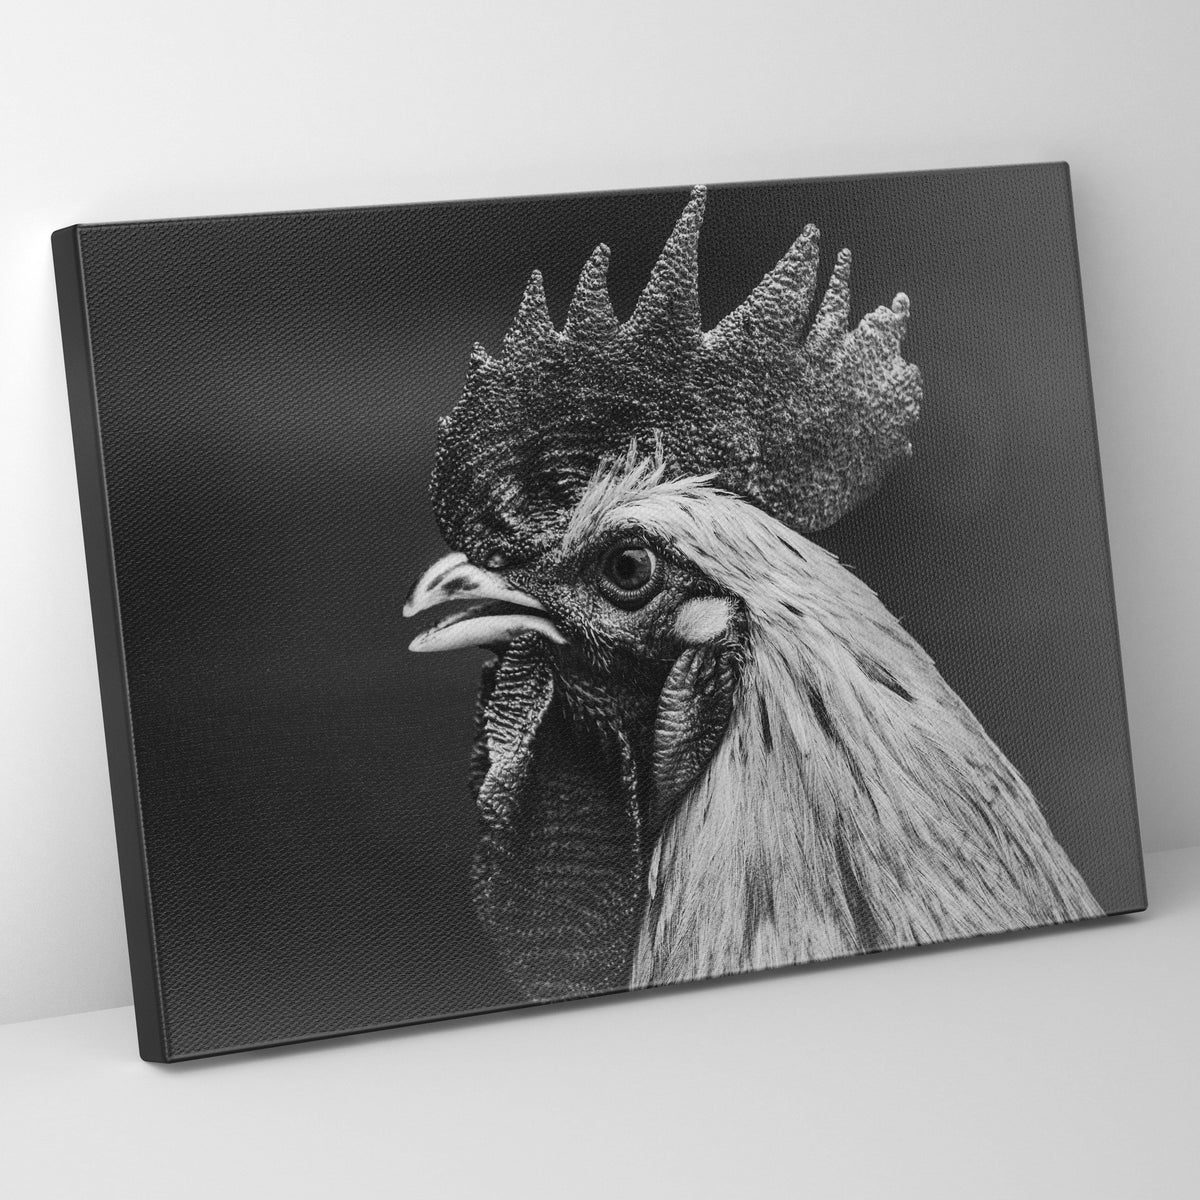 B/W Rooster Prints | Far Out Art 